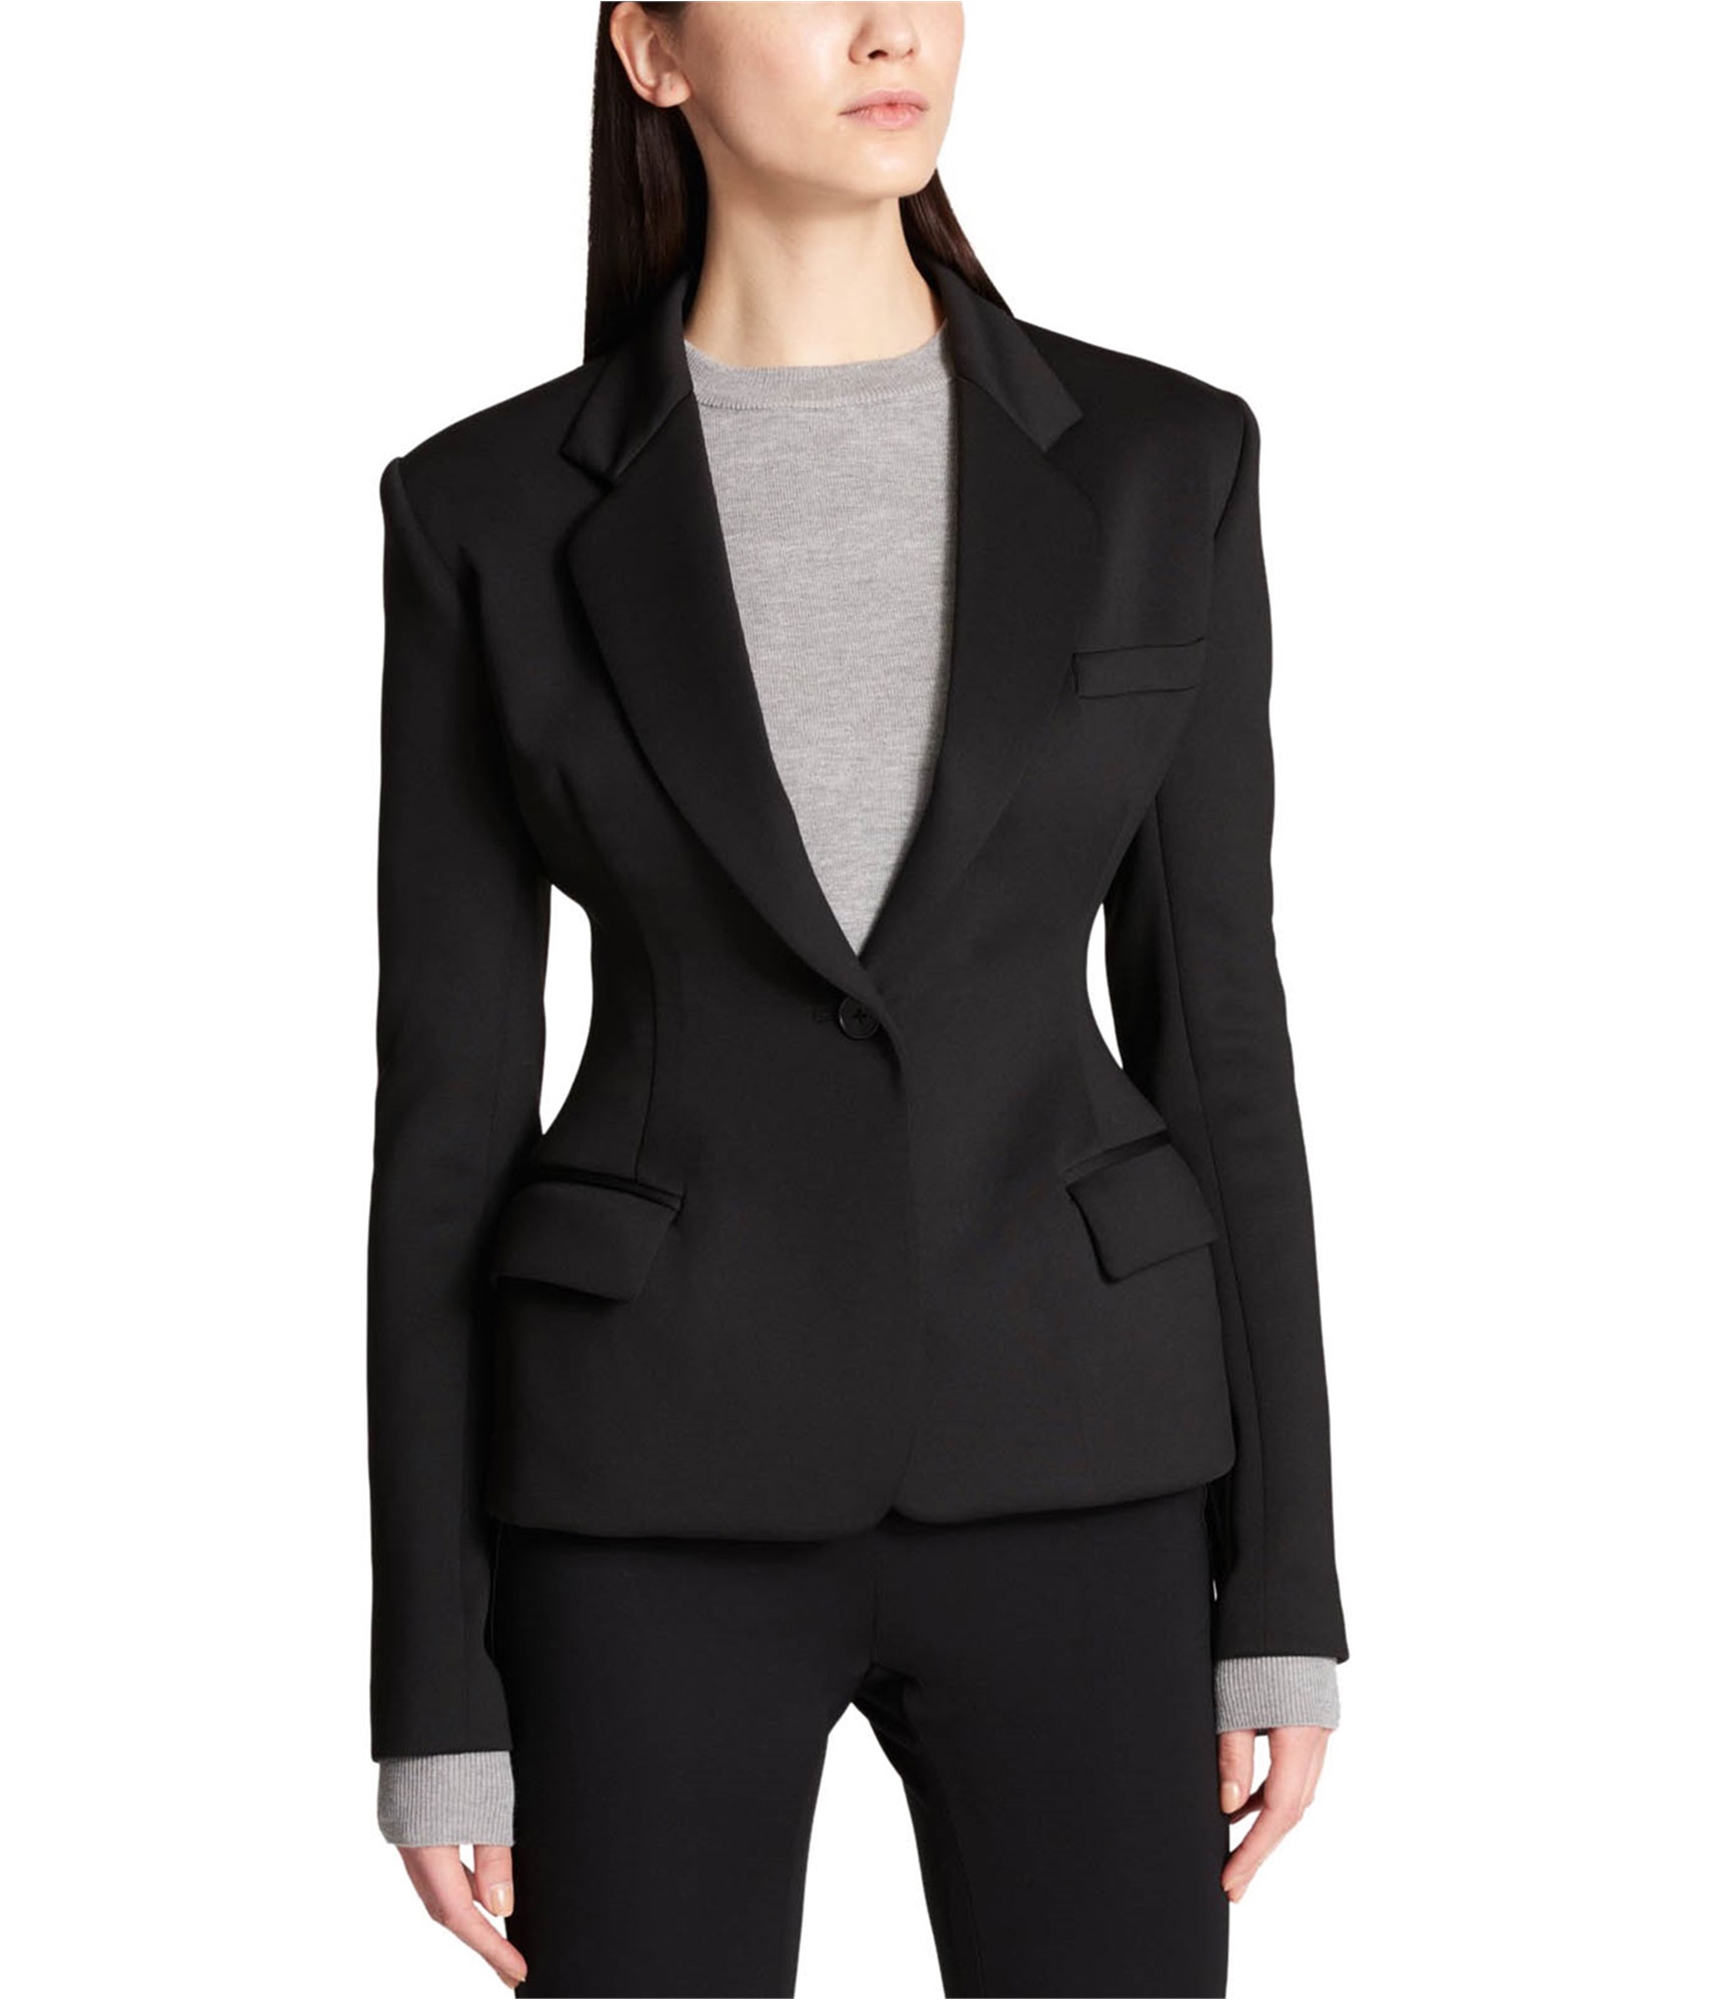 DKNY Womens Exaggerated-Fit One Button Blazer Jacket, Black, 4 | eBay